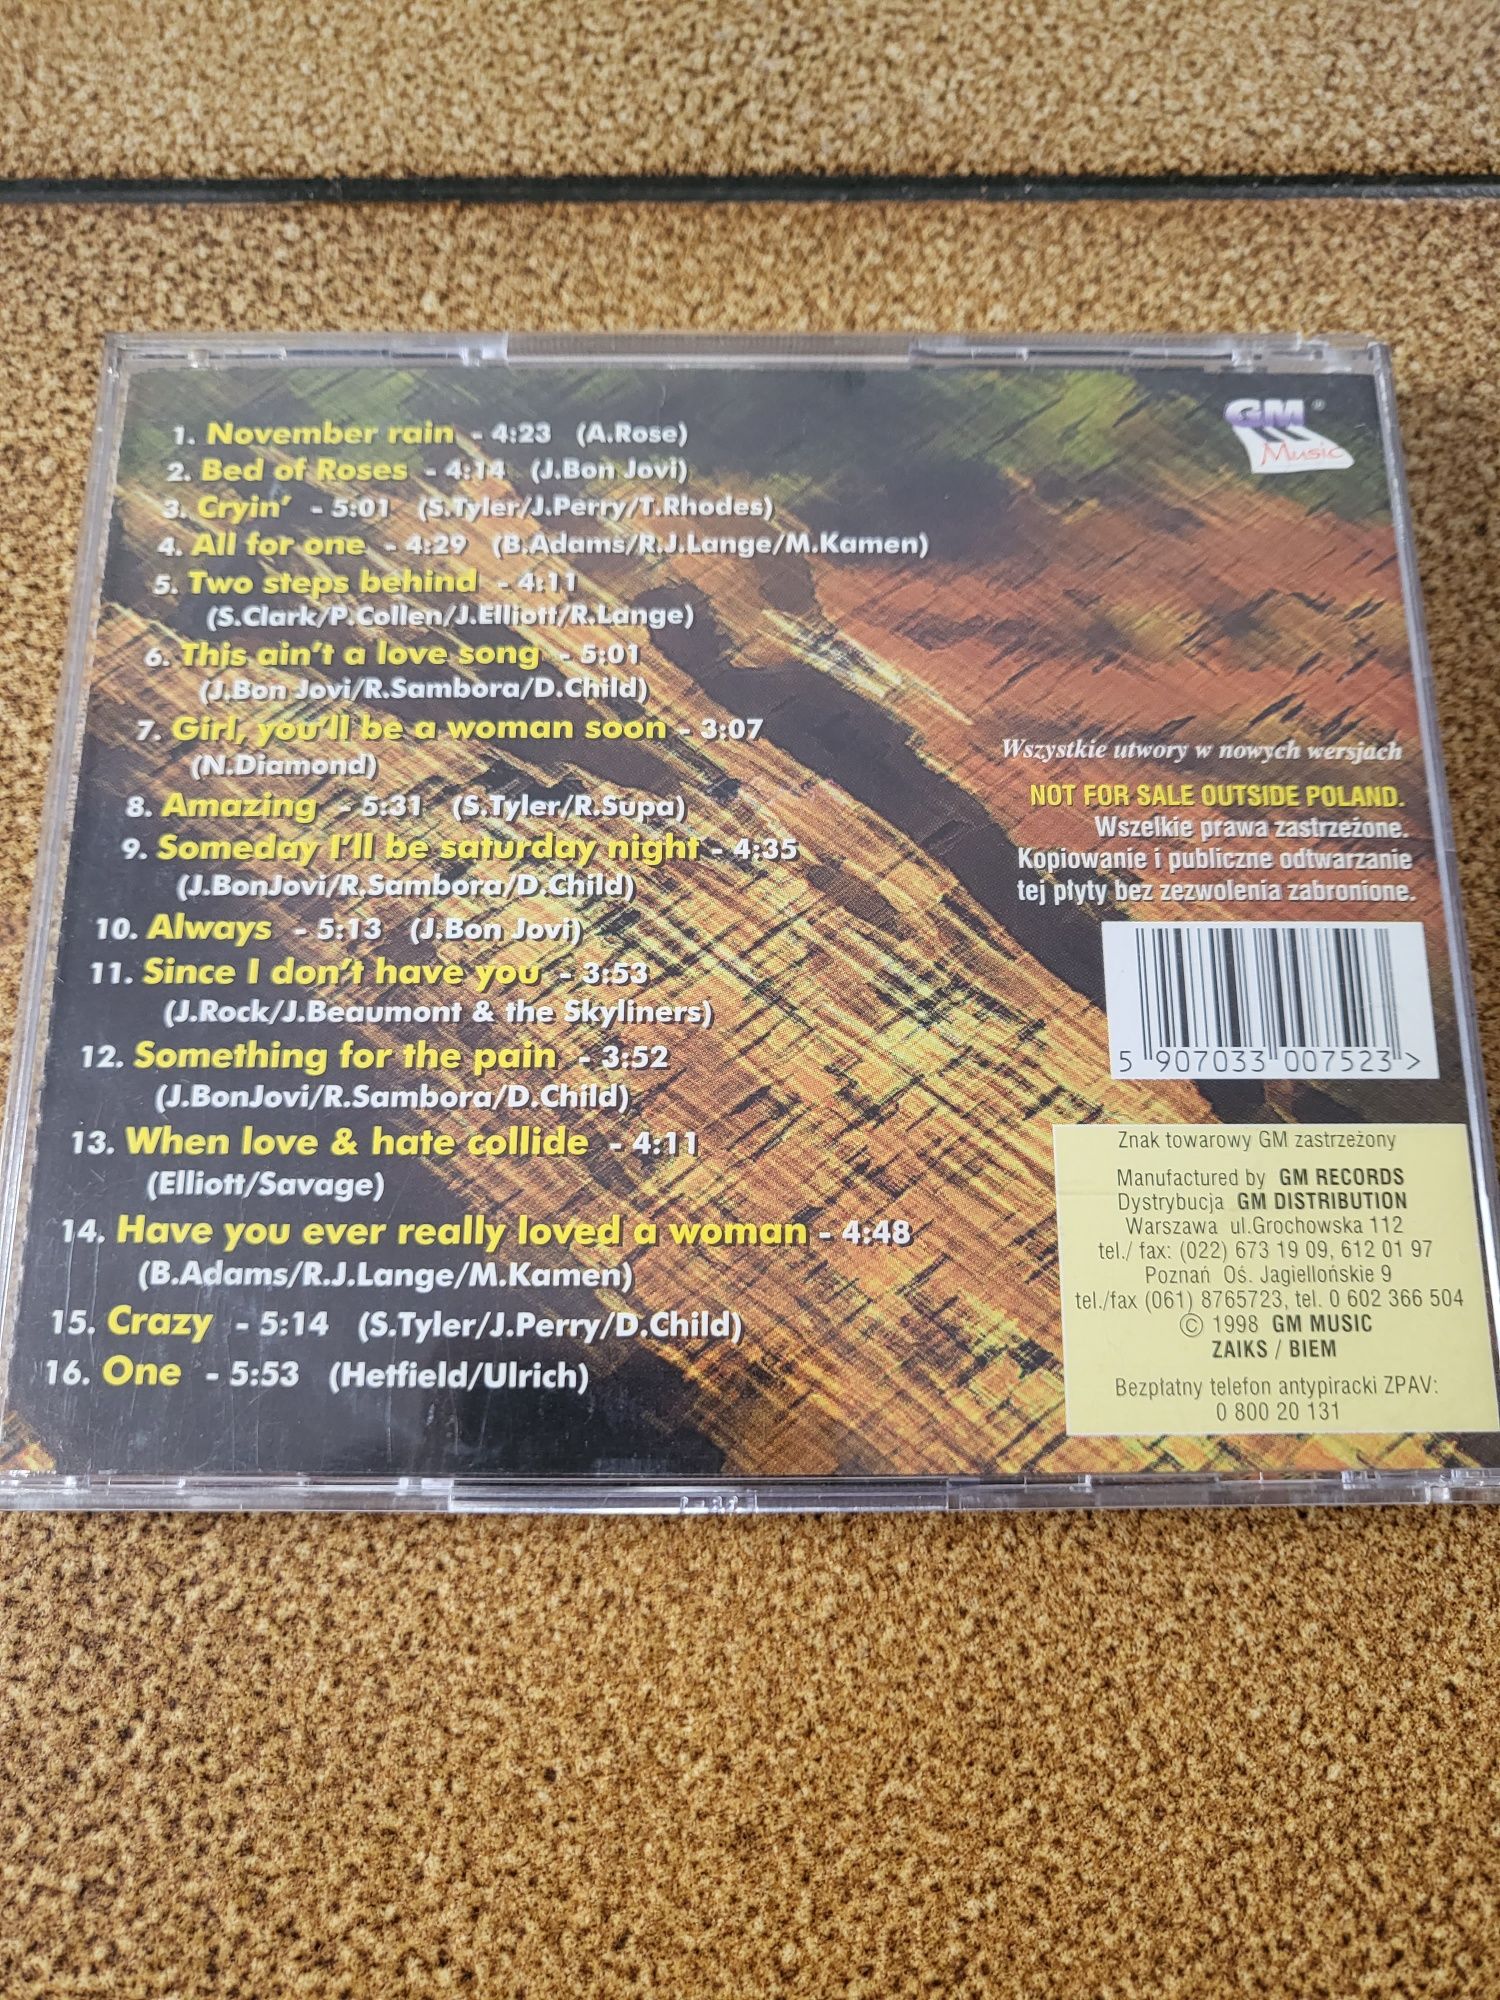 Metal ballads Soft & heavy płyta CD